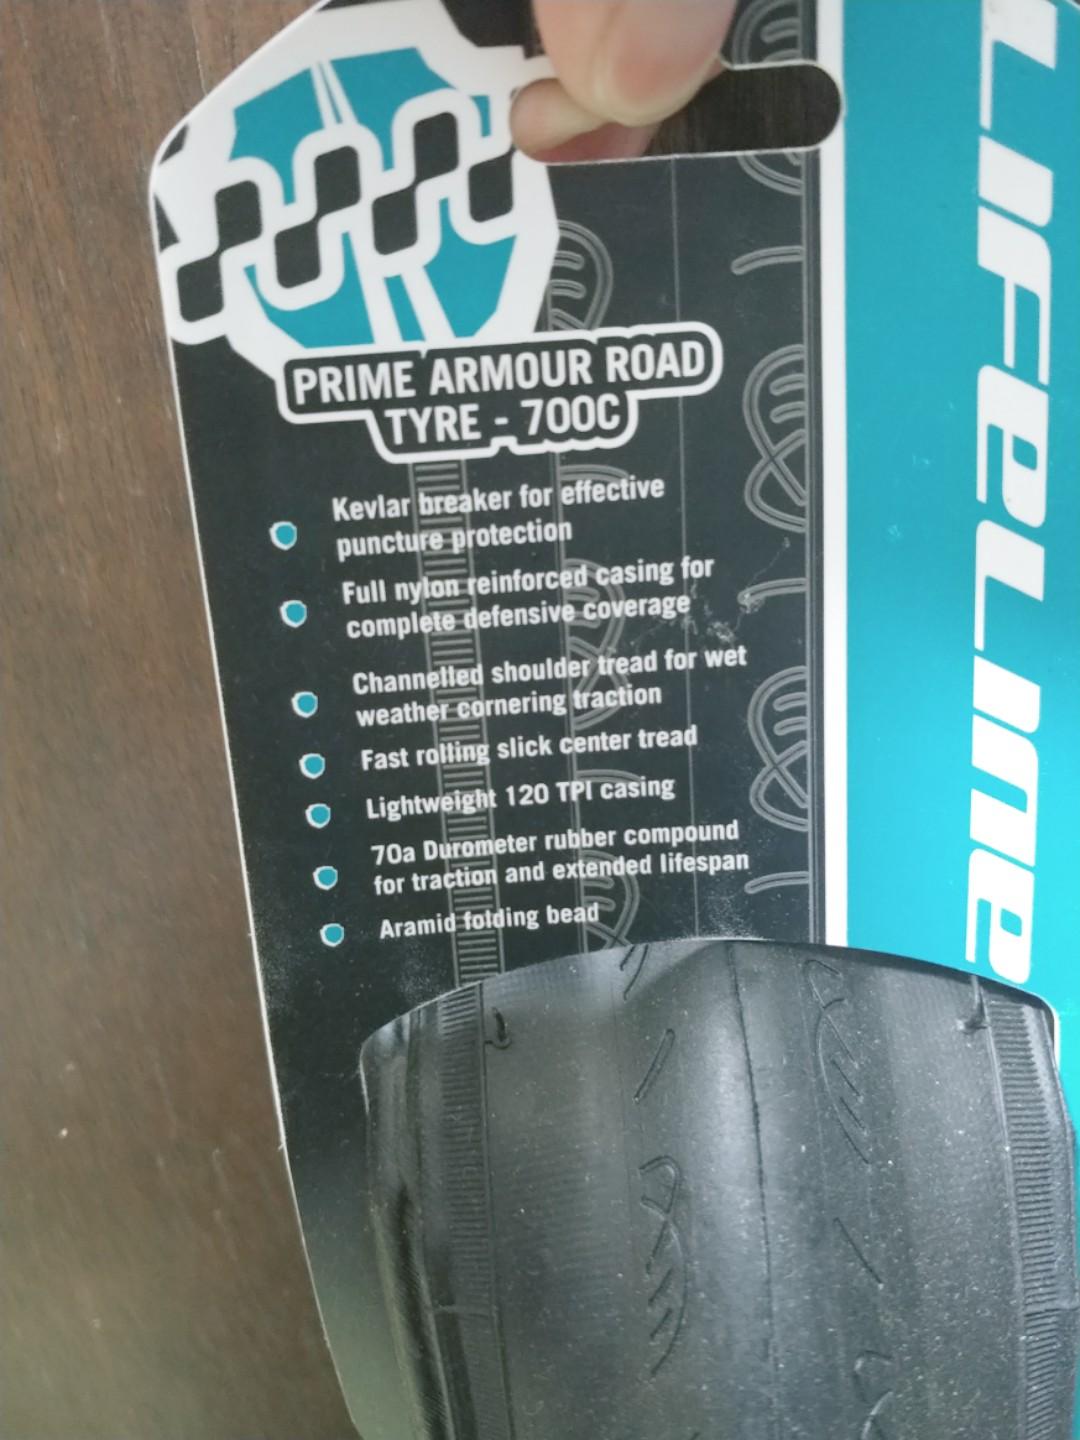 lifeline prime armour road tyre